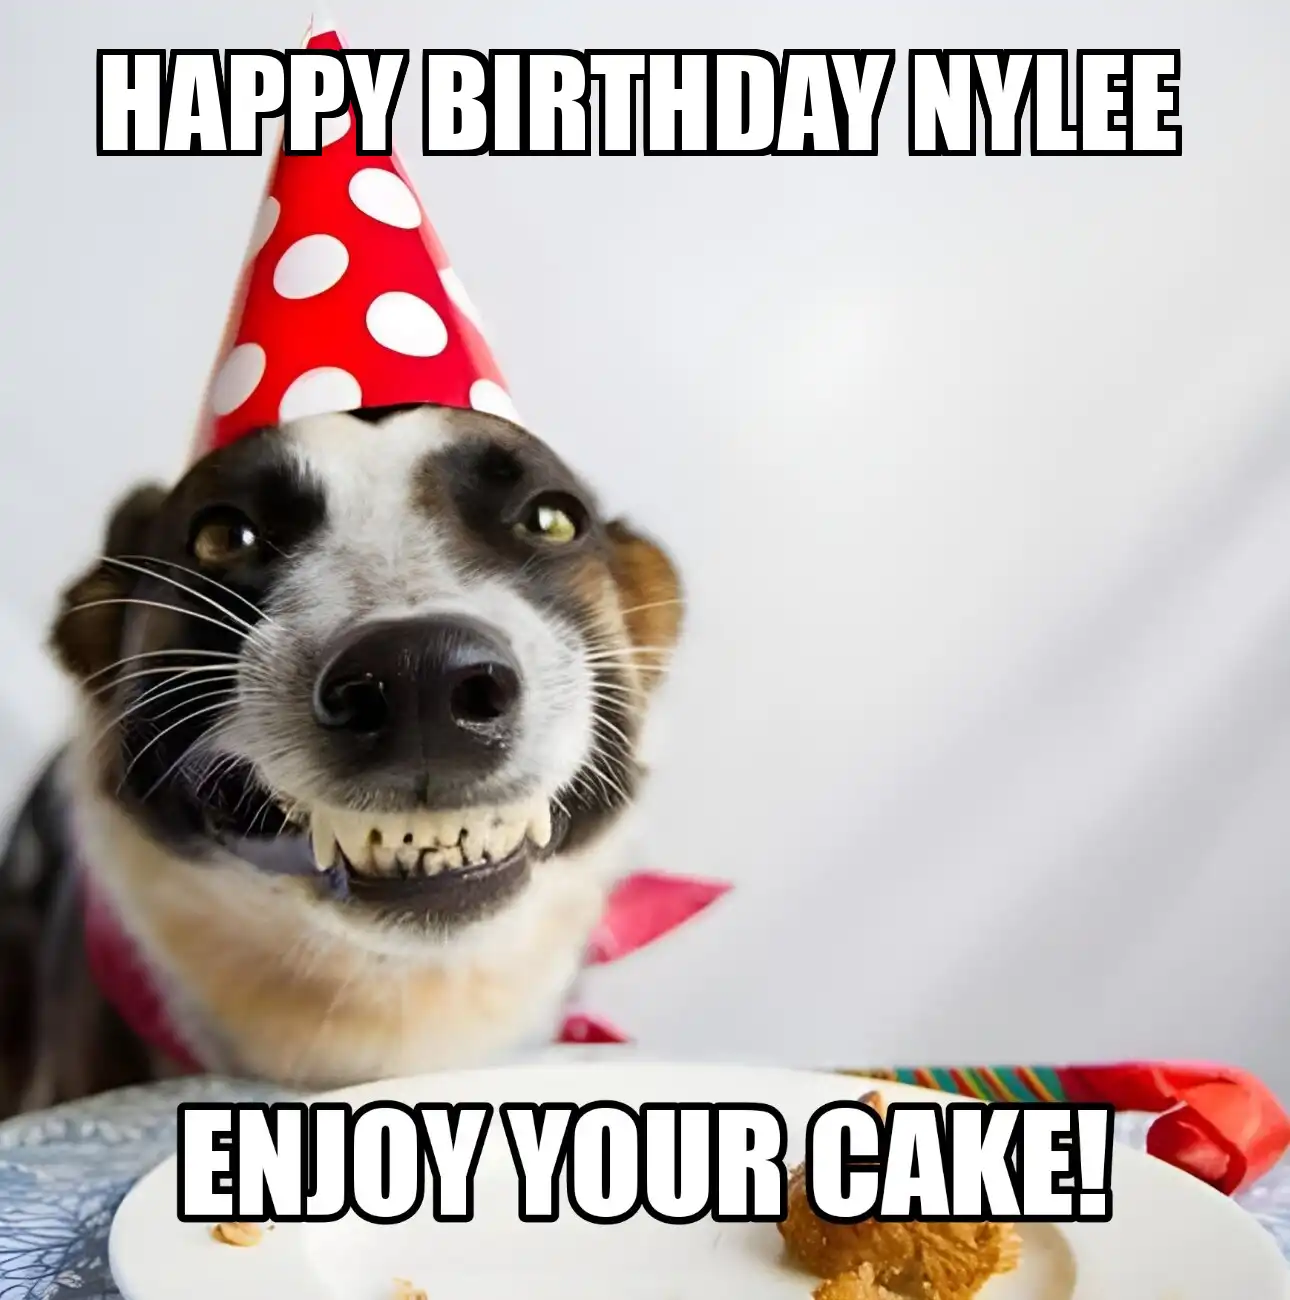 Happy Birthday Nylee Enjoy Your Cake Dog Meme